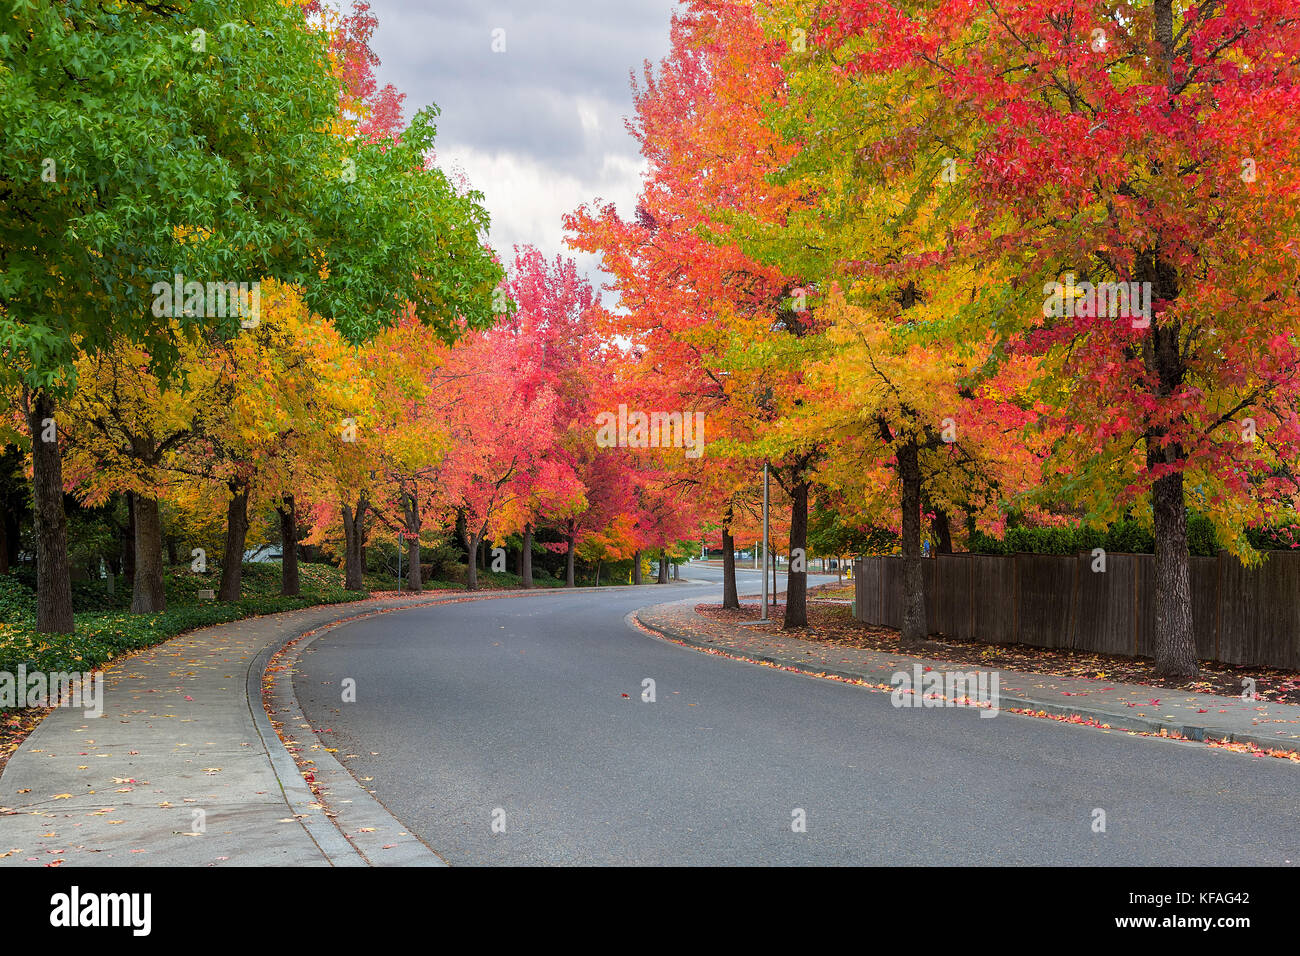 American Sweetgum trees lined street in suburban North American neighborhood street in fall season Stock Photo